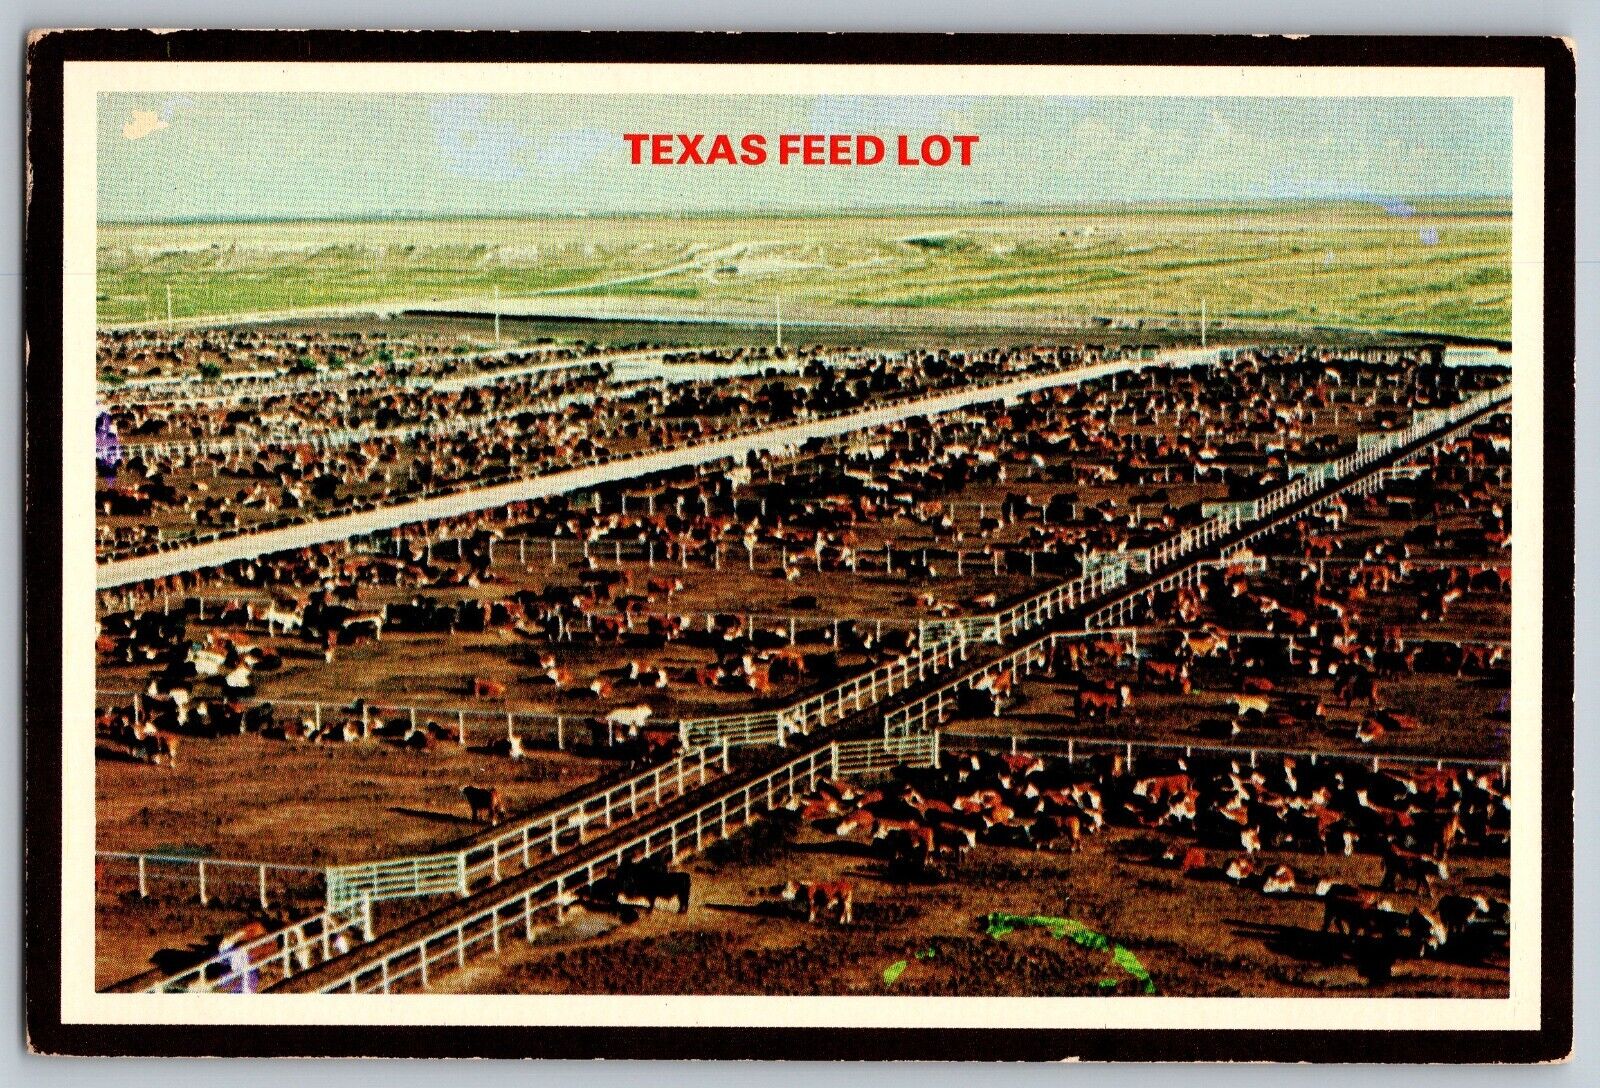 Texas TX - Cattle Feed Lot - Amarillo Headquarters - Vintage Postcard 4x6